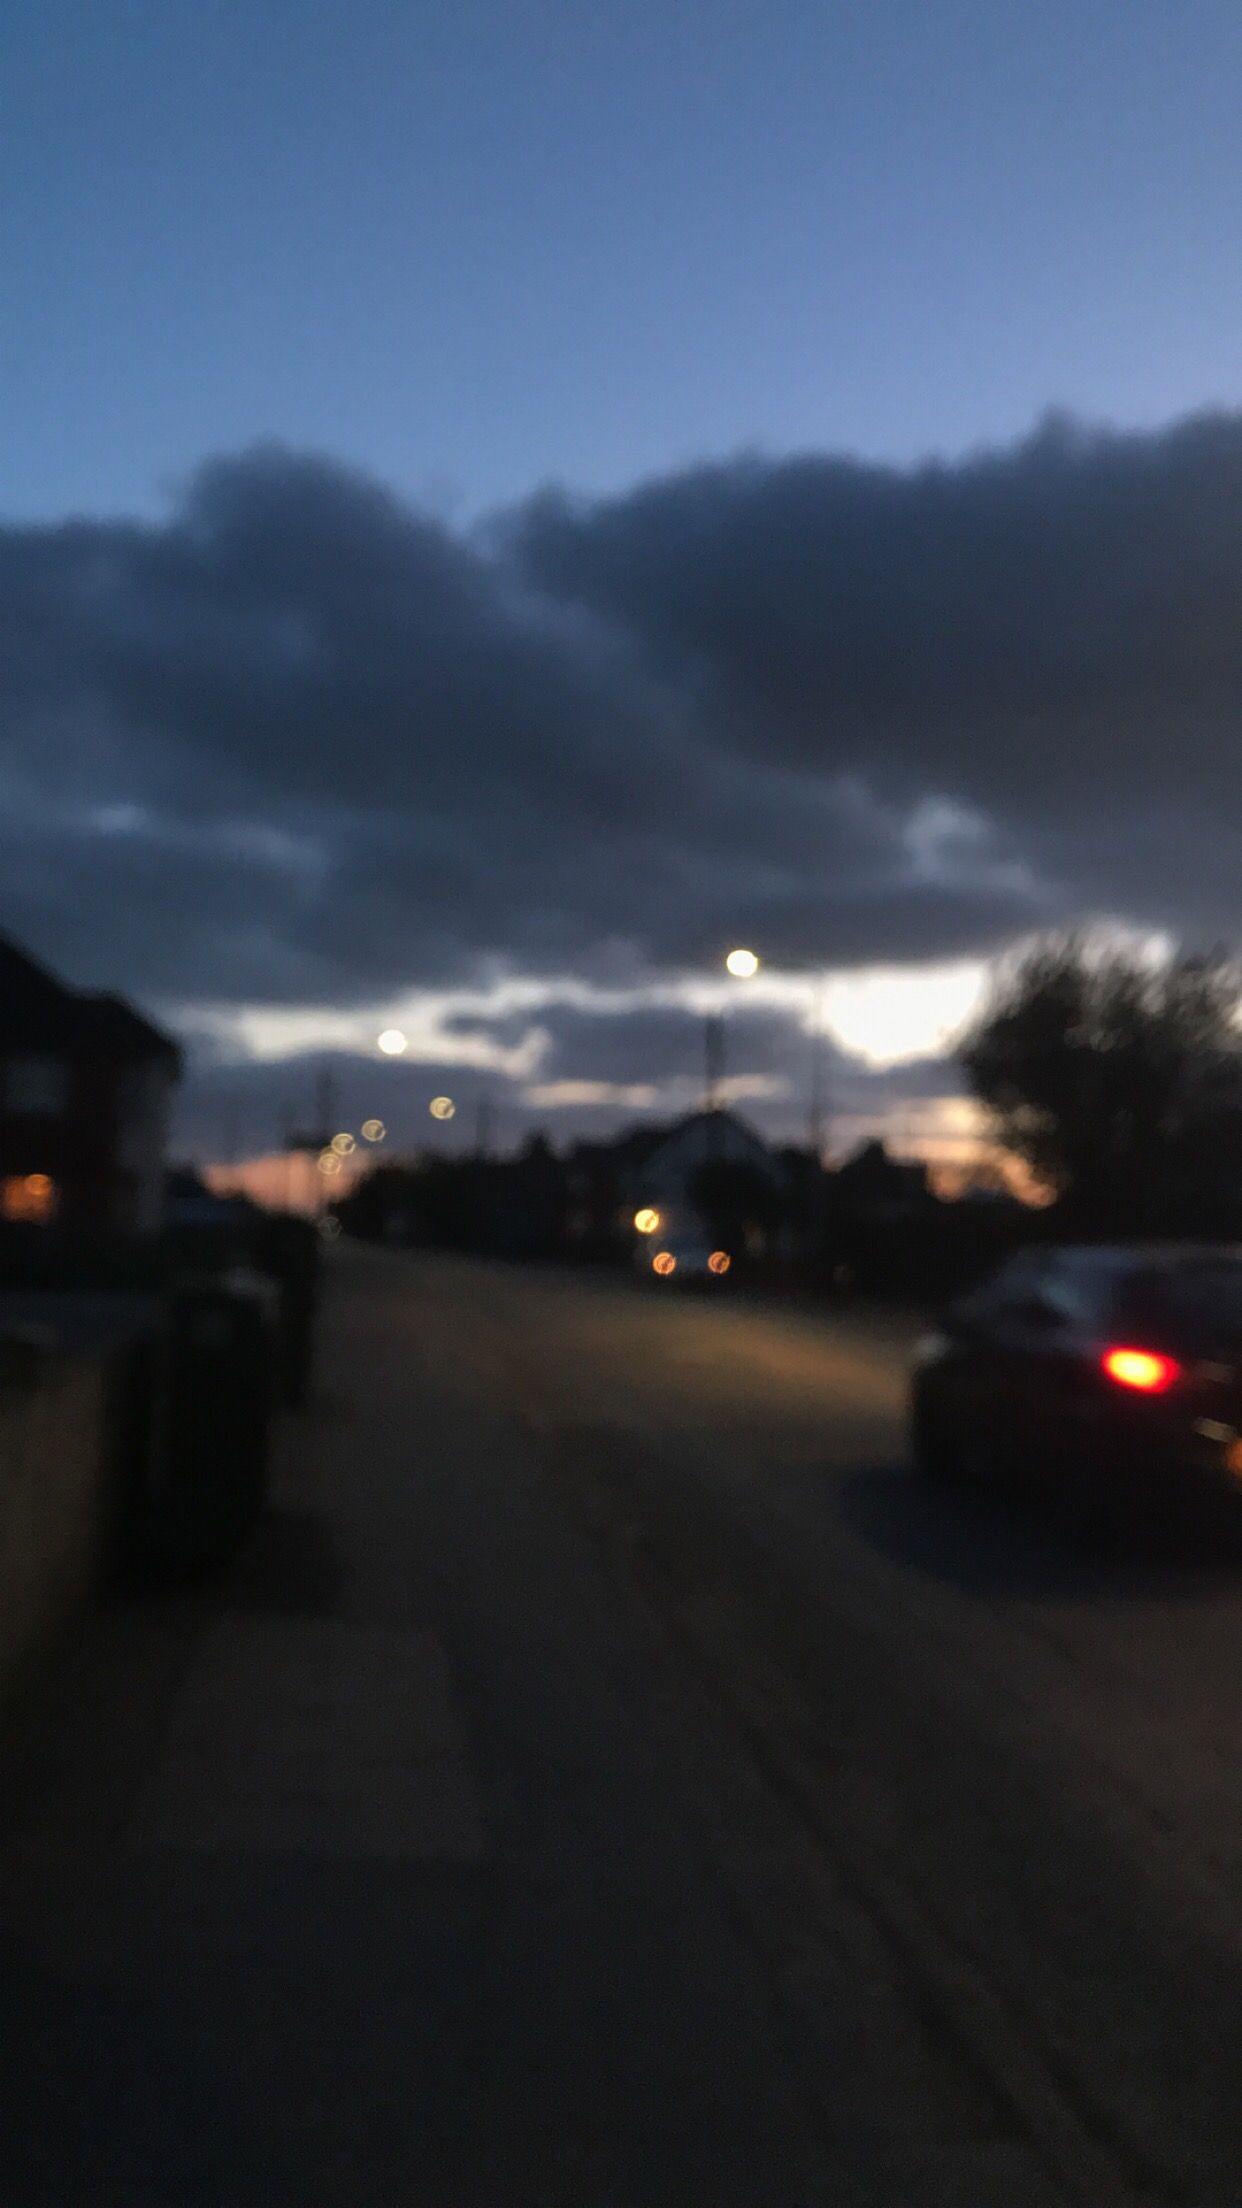 Late night walk ;) #Night #Clouds #Calm #Lights #Blurry #Cold. Night walking, Night aesthetic, Night vibes